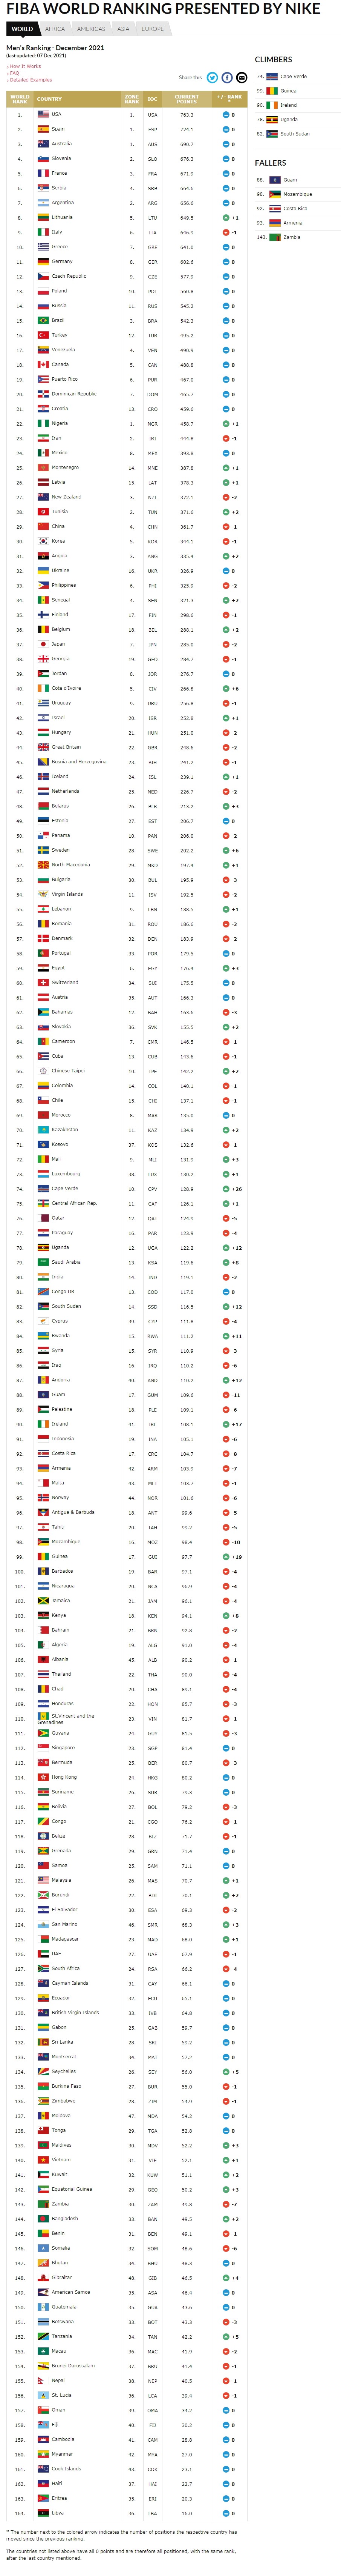 FIBA World Ranking Presented by NIKE, men - FIBA.b.jpg